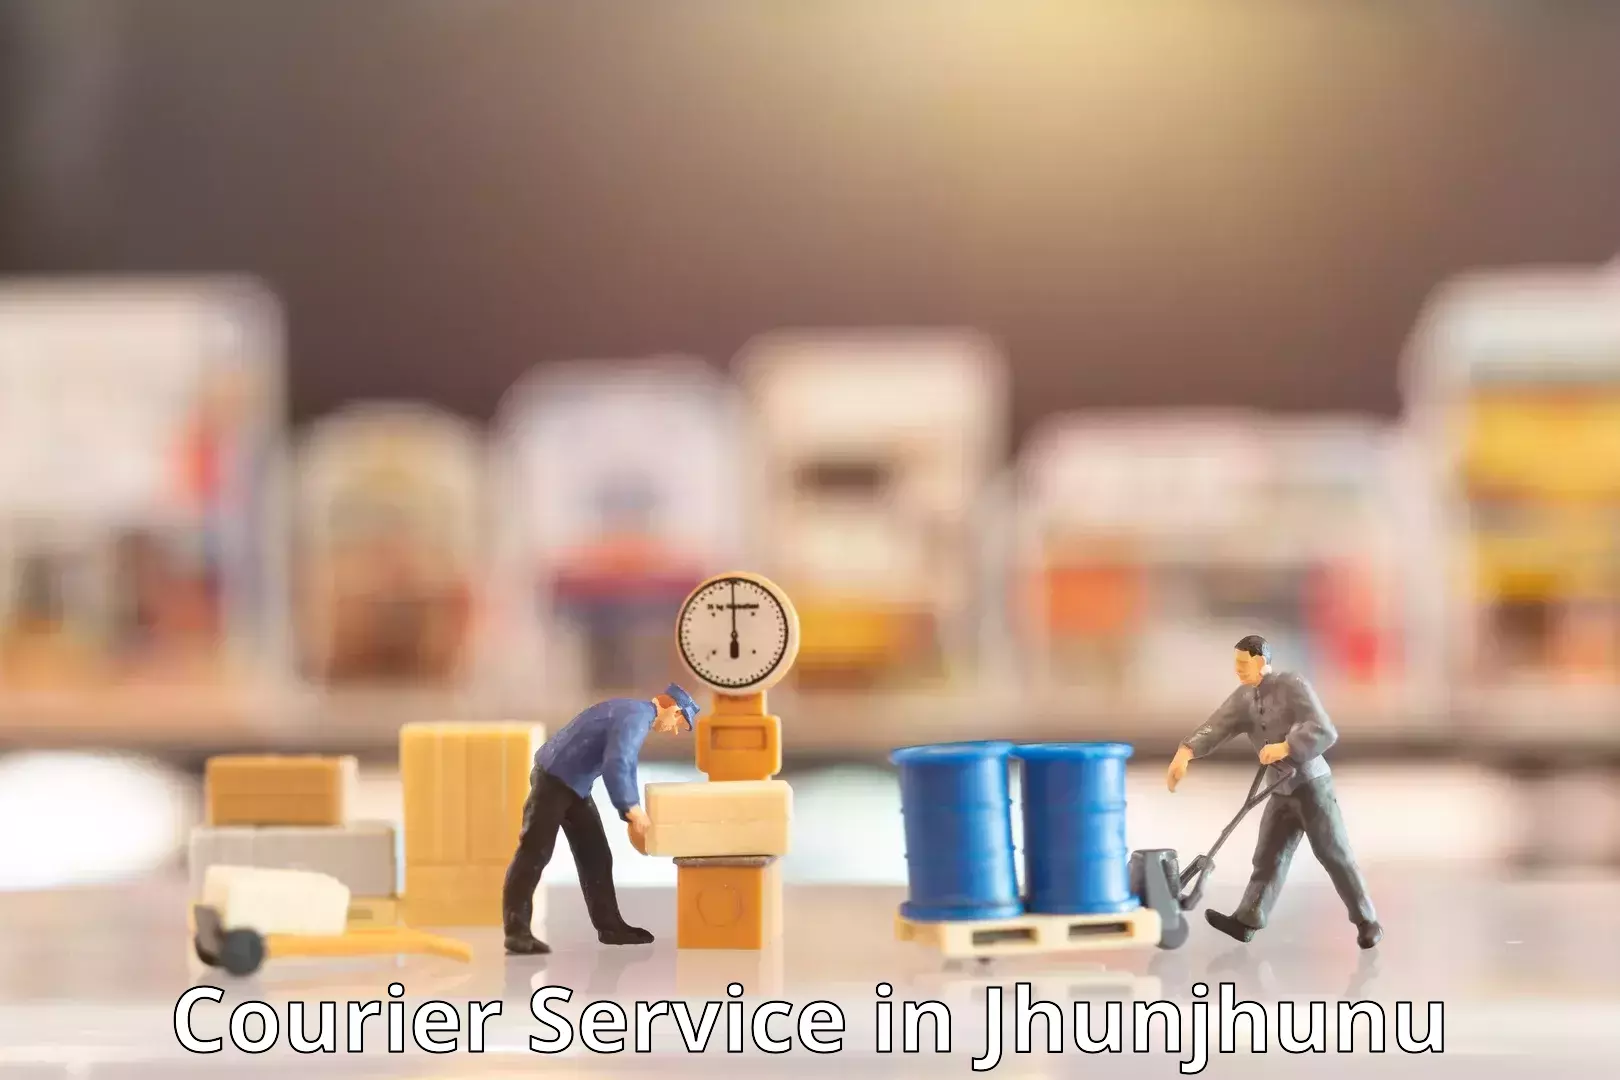 Delivery service partnership in Jhunjhunu